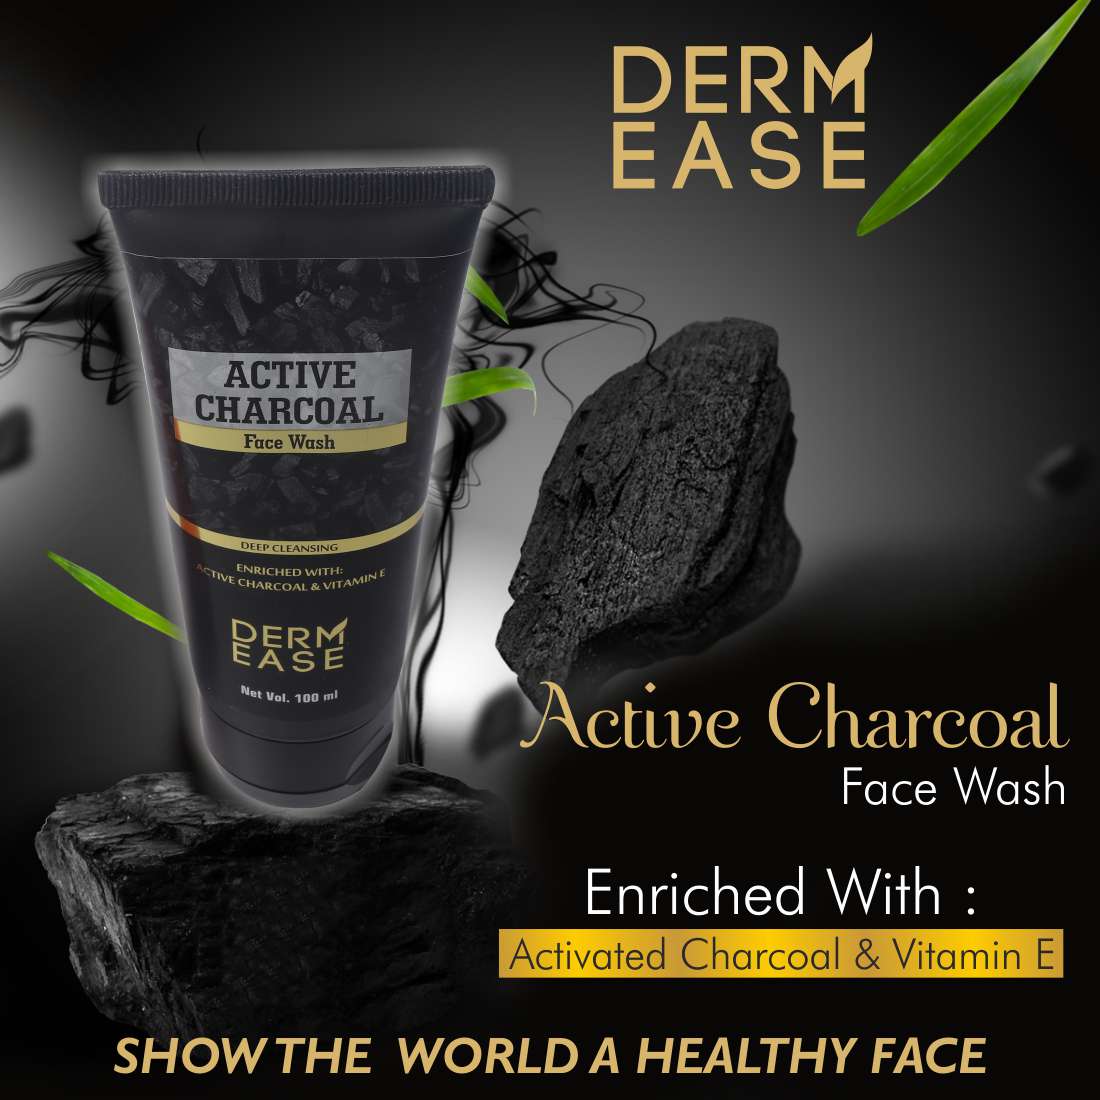 DERM EASE Active Charcoal Face Wash